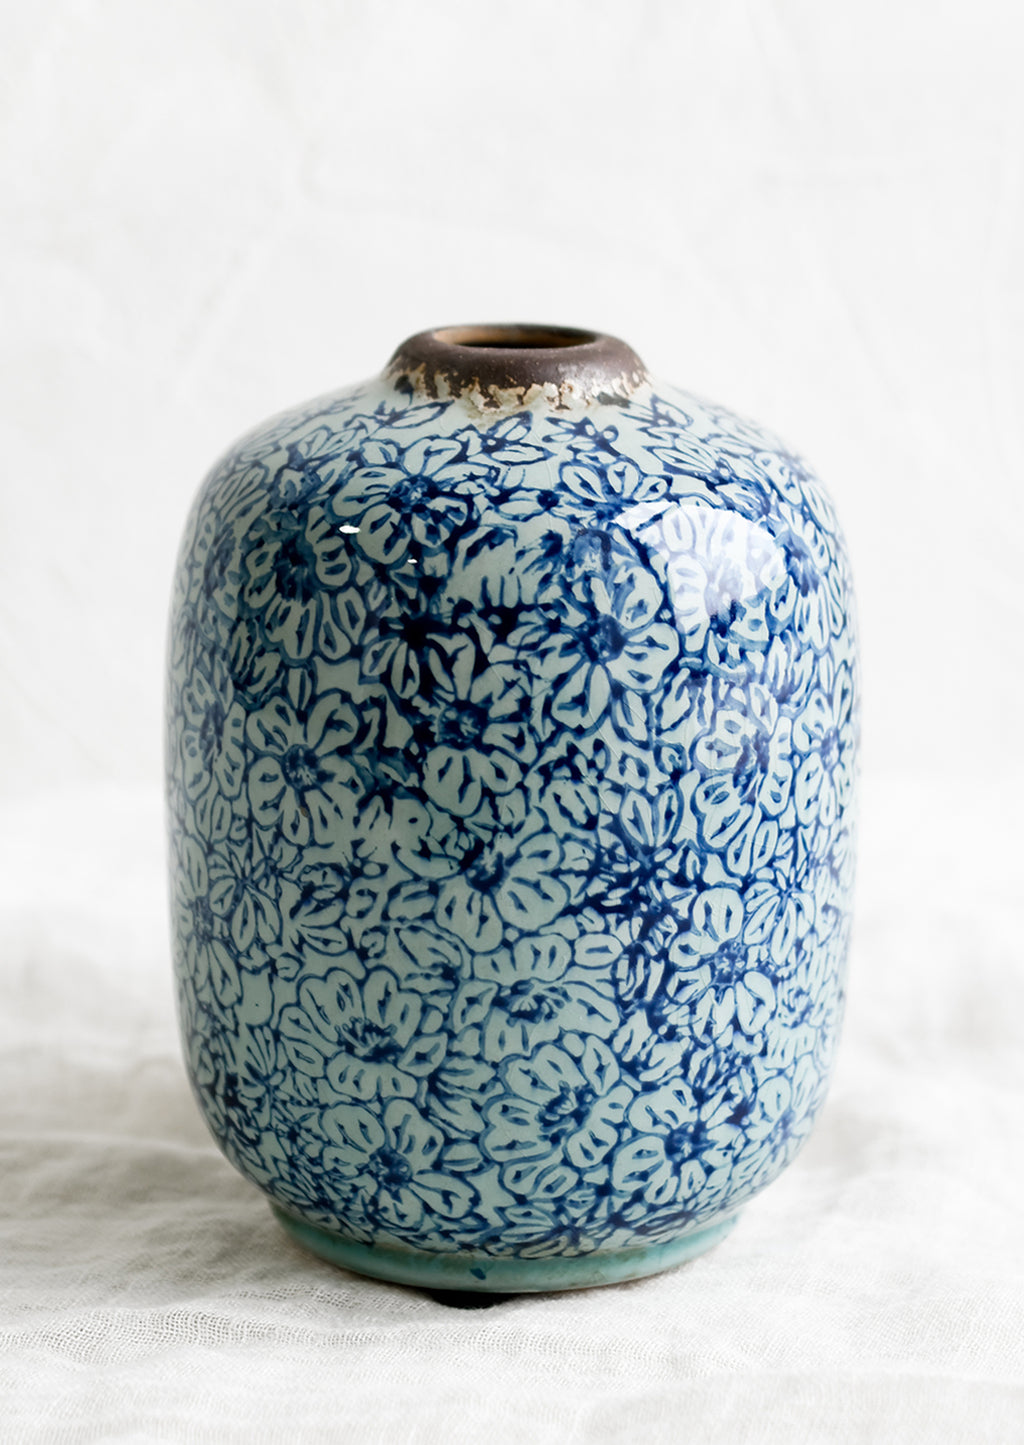 2: A vintage-look ceramic vase with indigo floral pattern.